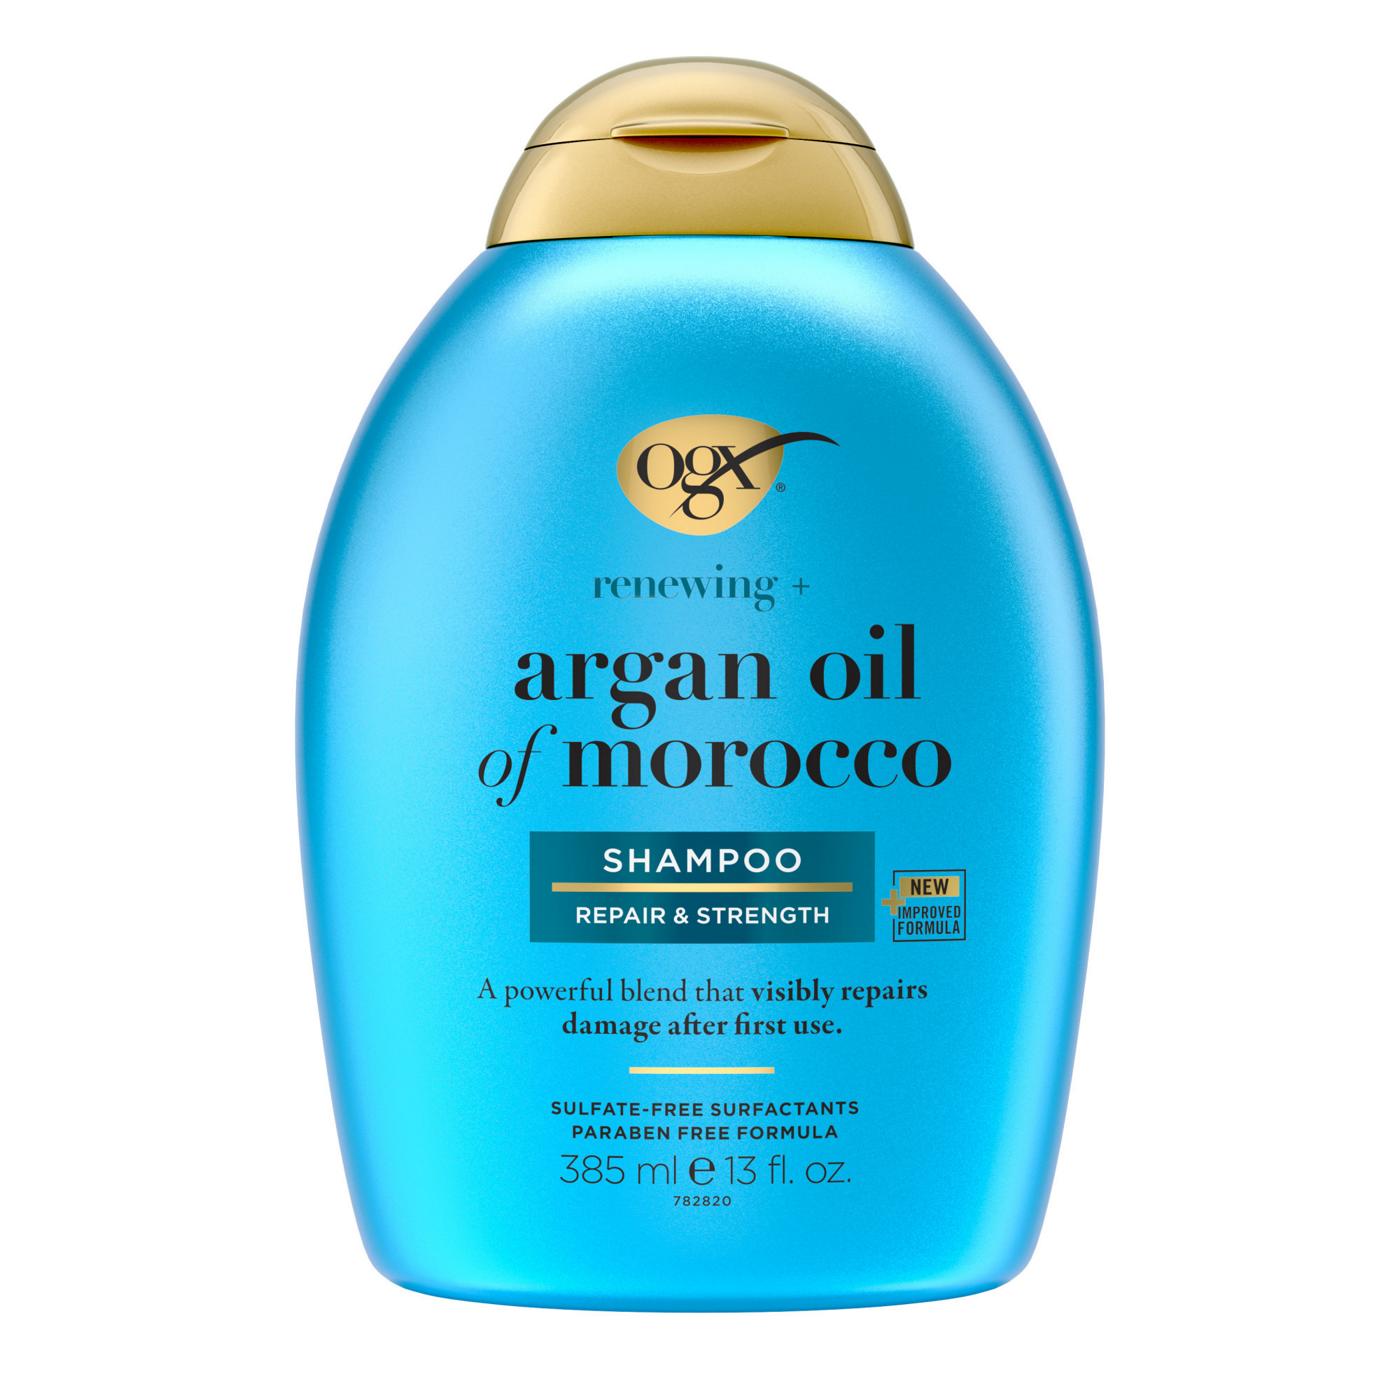 OGX Renewing + Oil of Morocco Shampoo - Shop Shampoo & Conditioner H-E-B